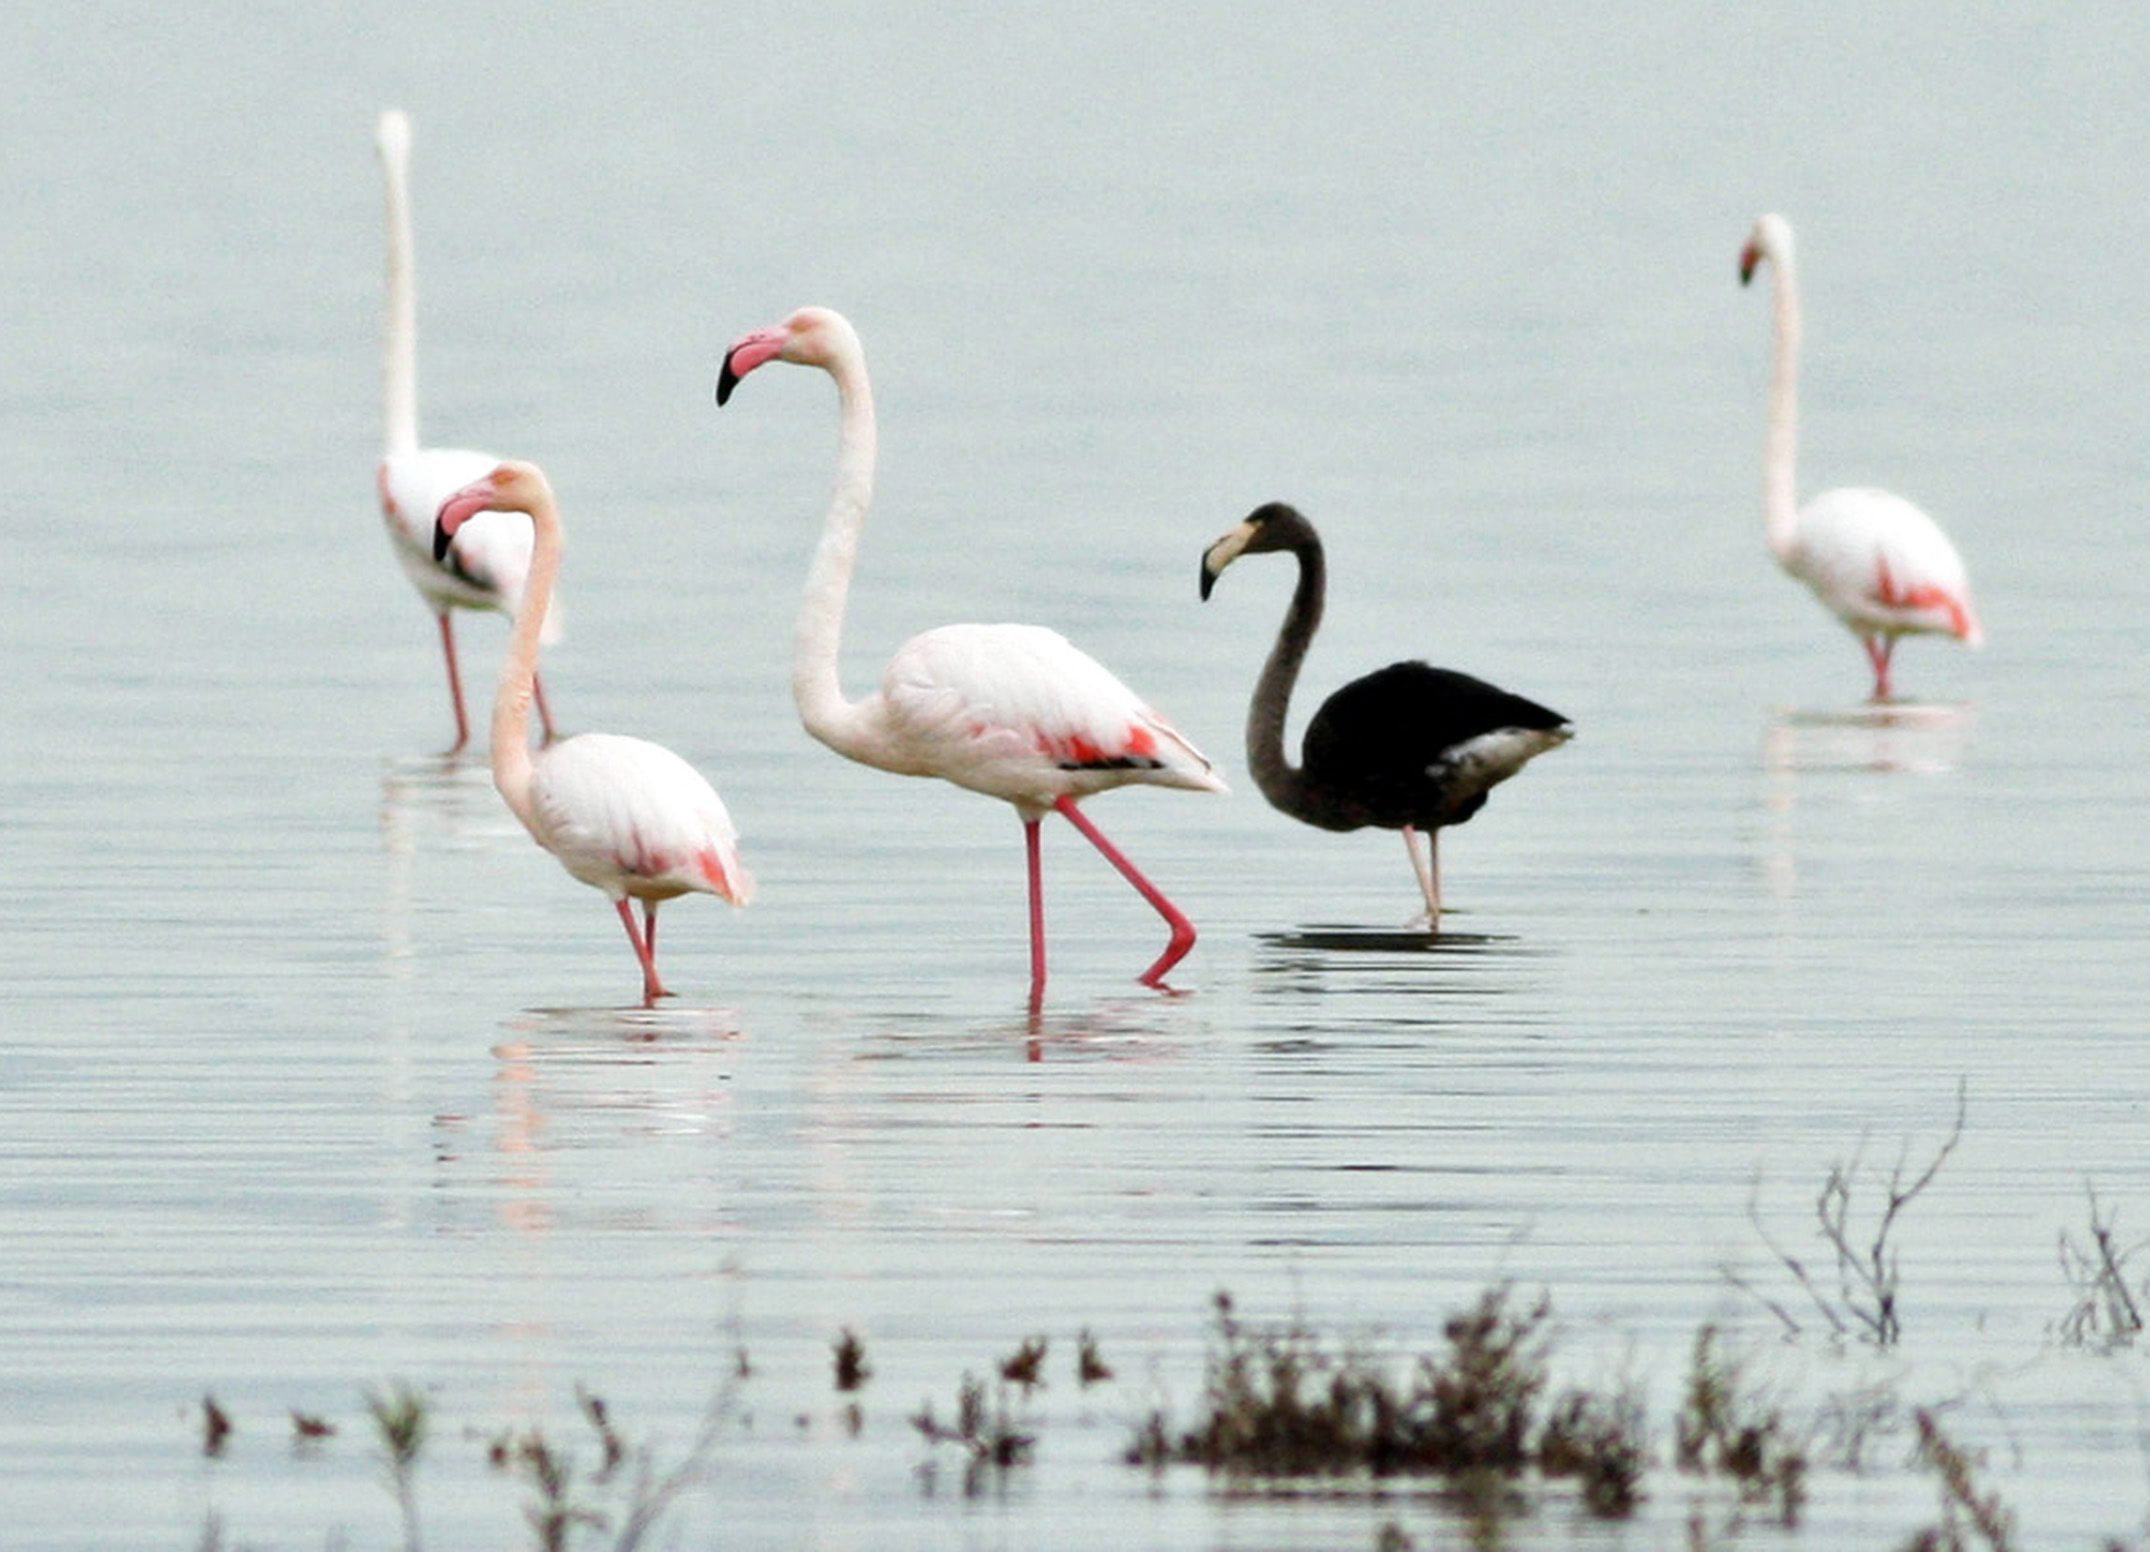 Rare Black Flamingo Ruffles Feathers in Cyprus